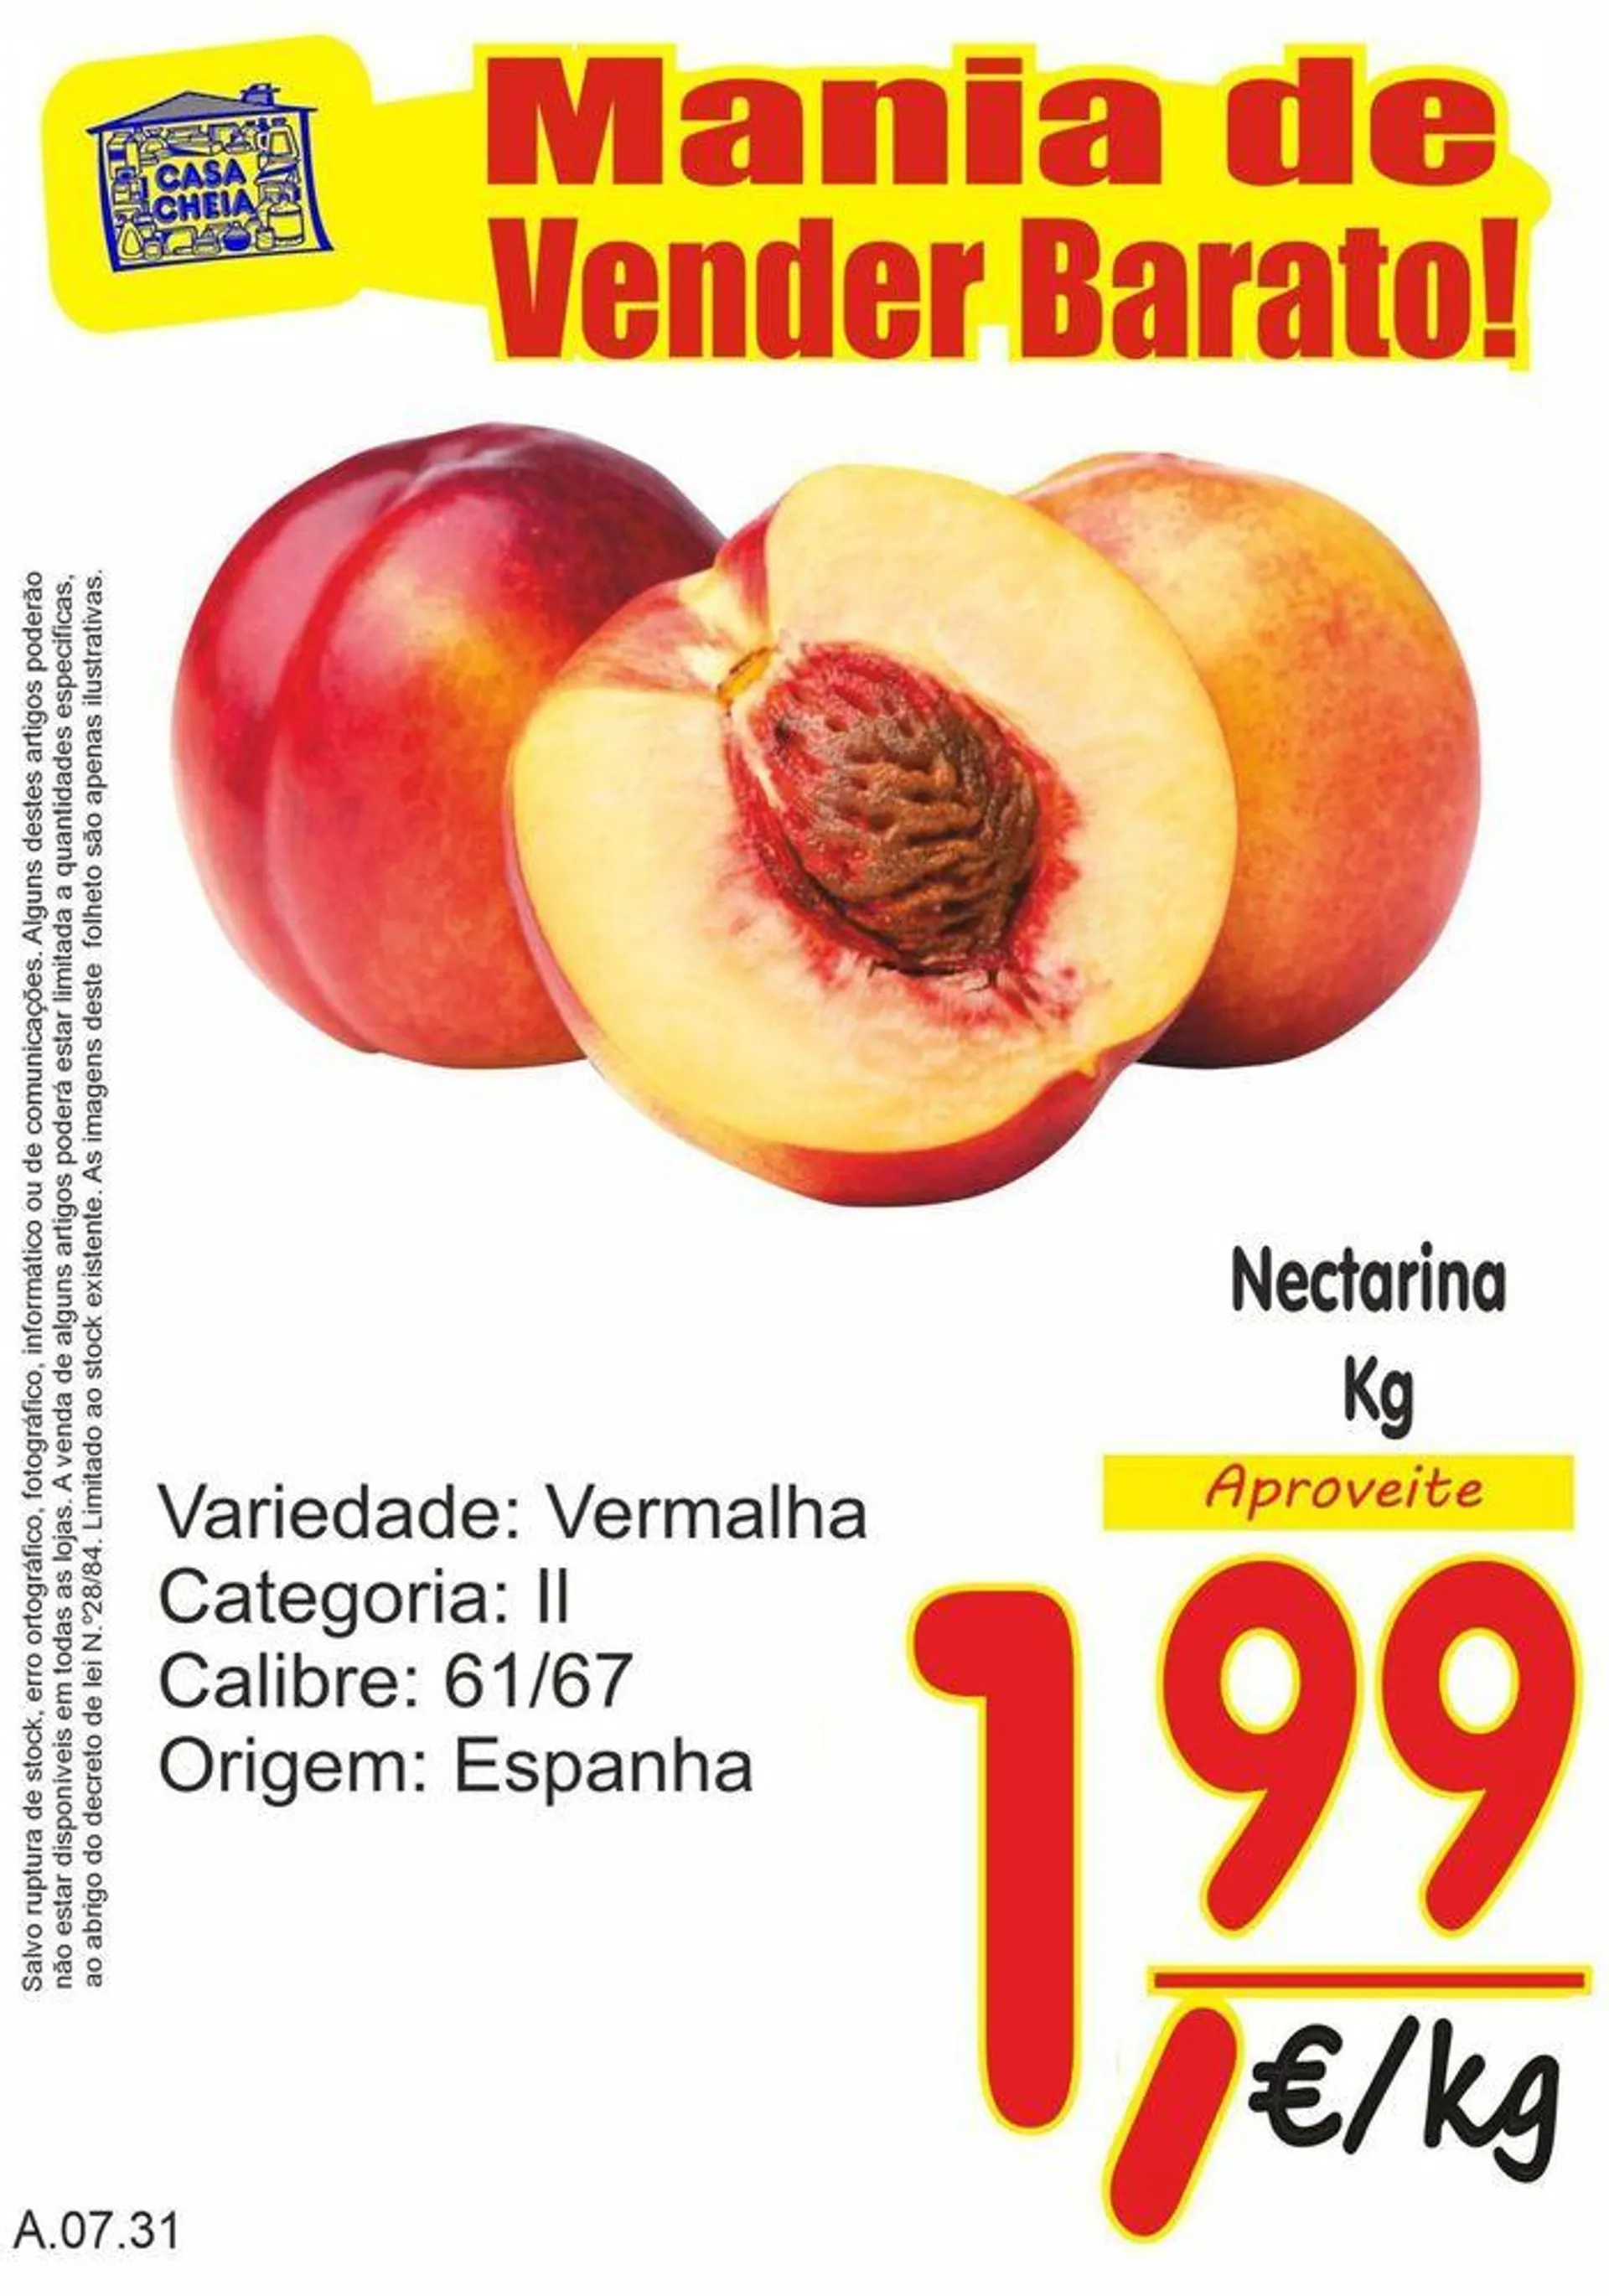 Nectarina - 1